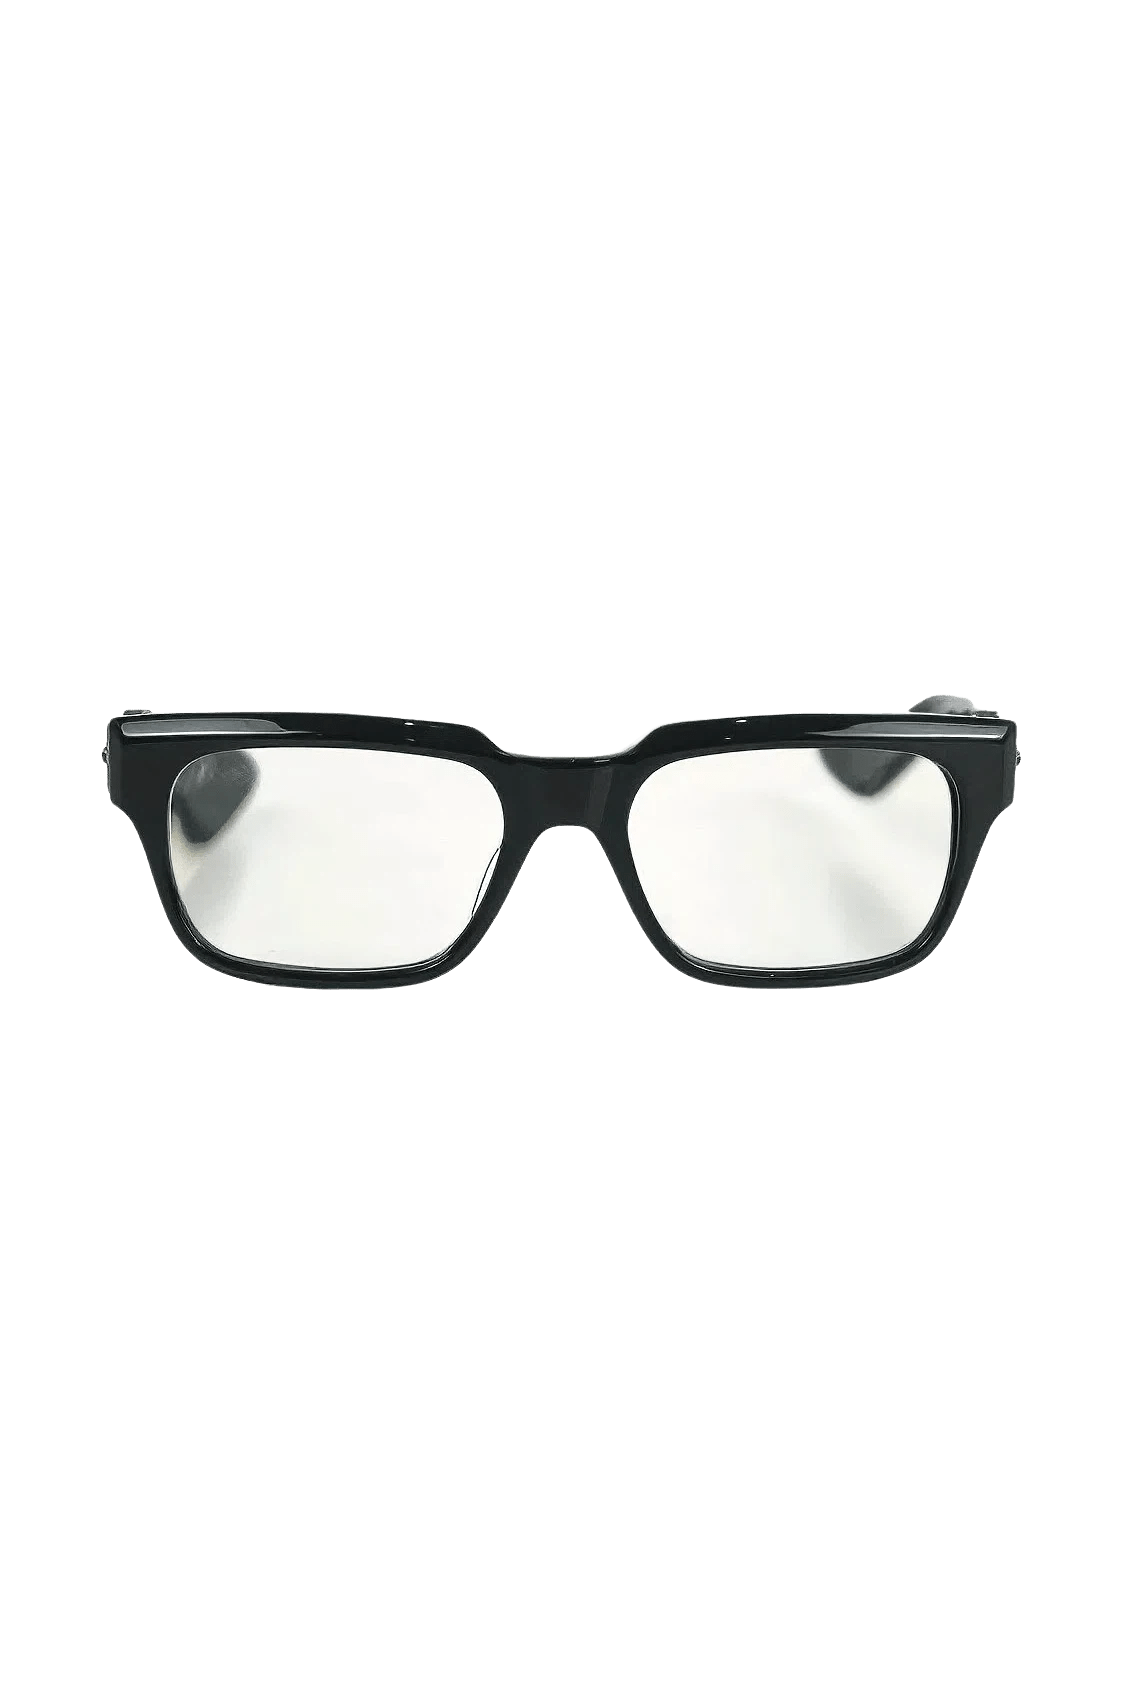 Chrome Hearts "Vagillionaire" i Black Glasses Silver Hardware - Foxy Couture Carmel